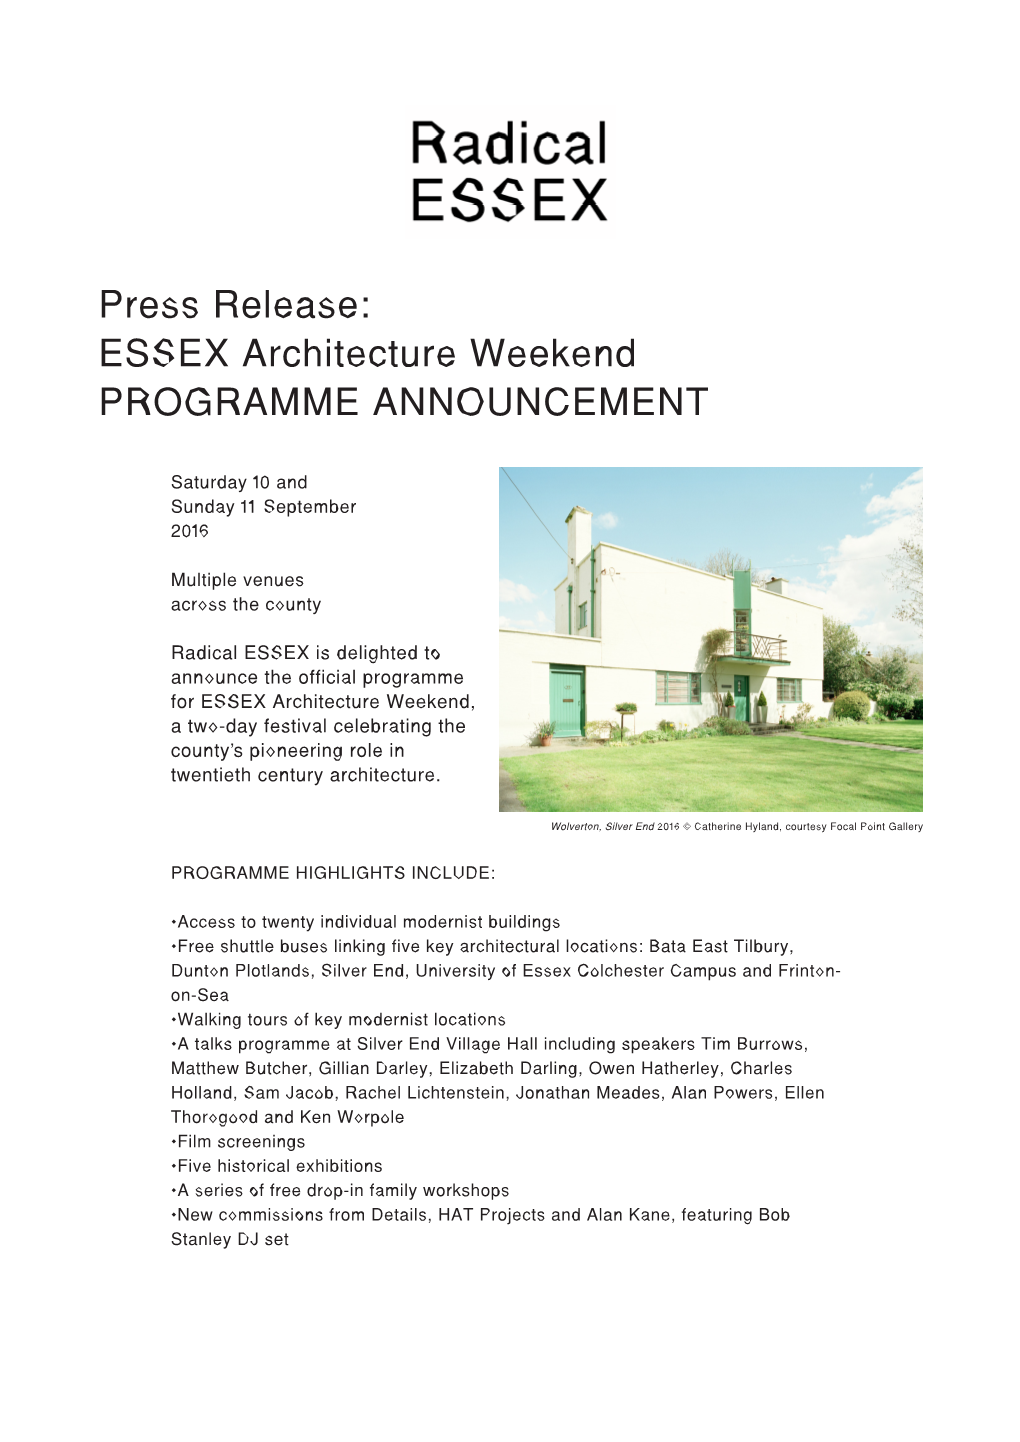 Press Release: ESSEX Architecture Weekend PROGRAMME ANNOUNCEMENT